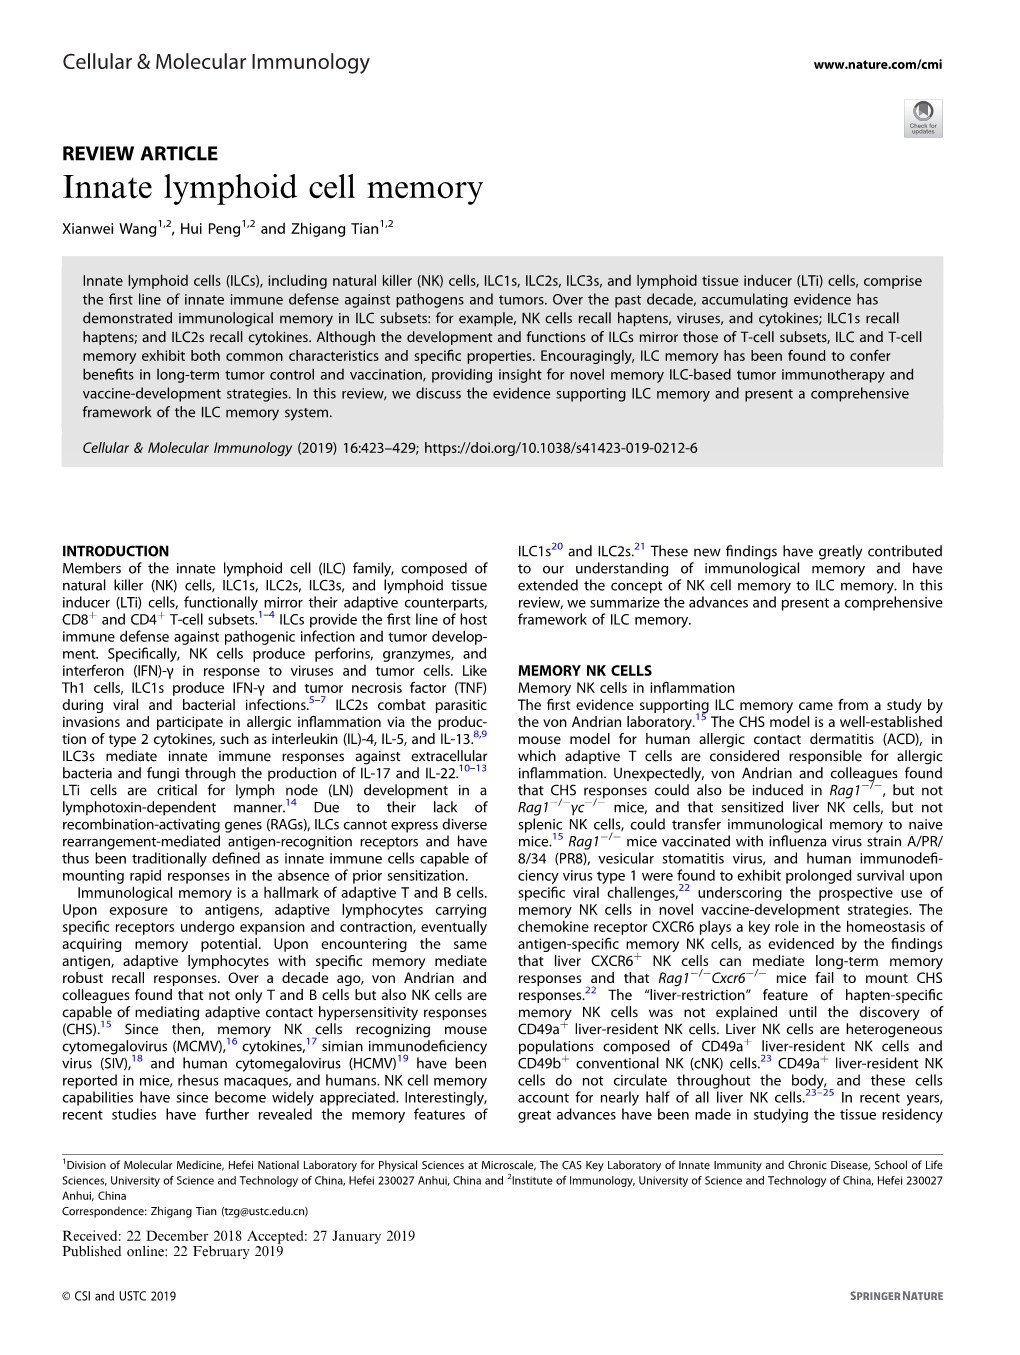 Innate Lymphoid Cell Memory